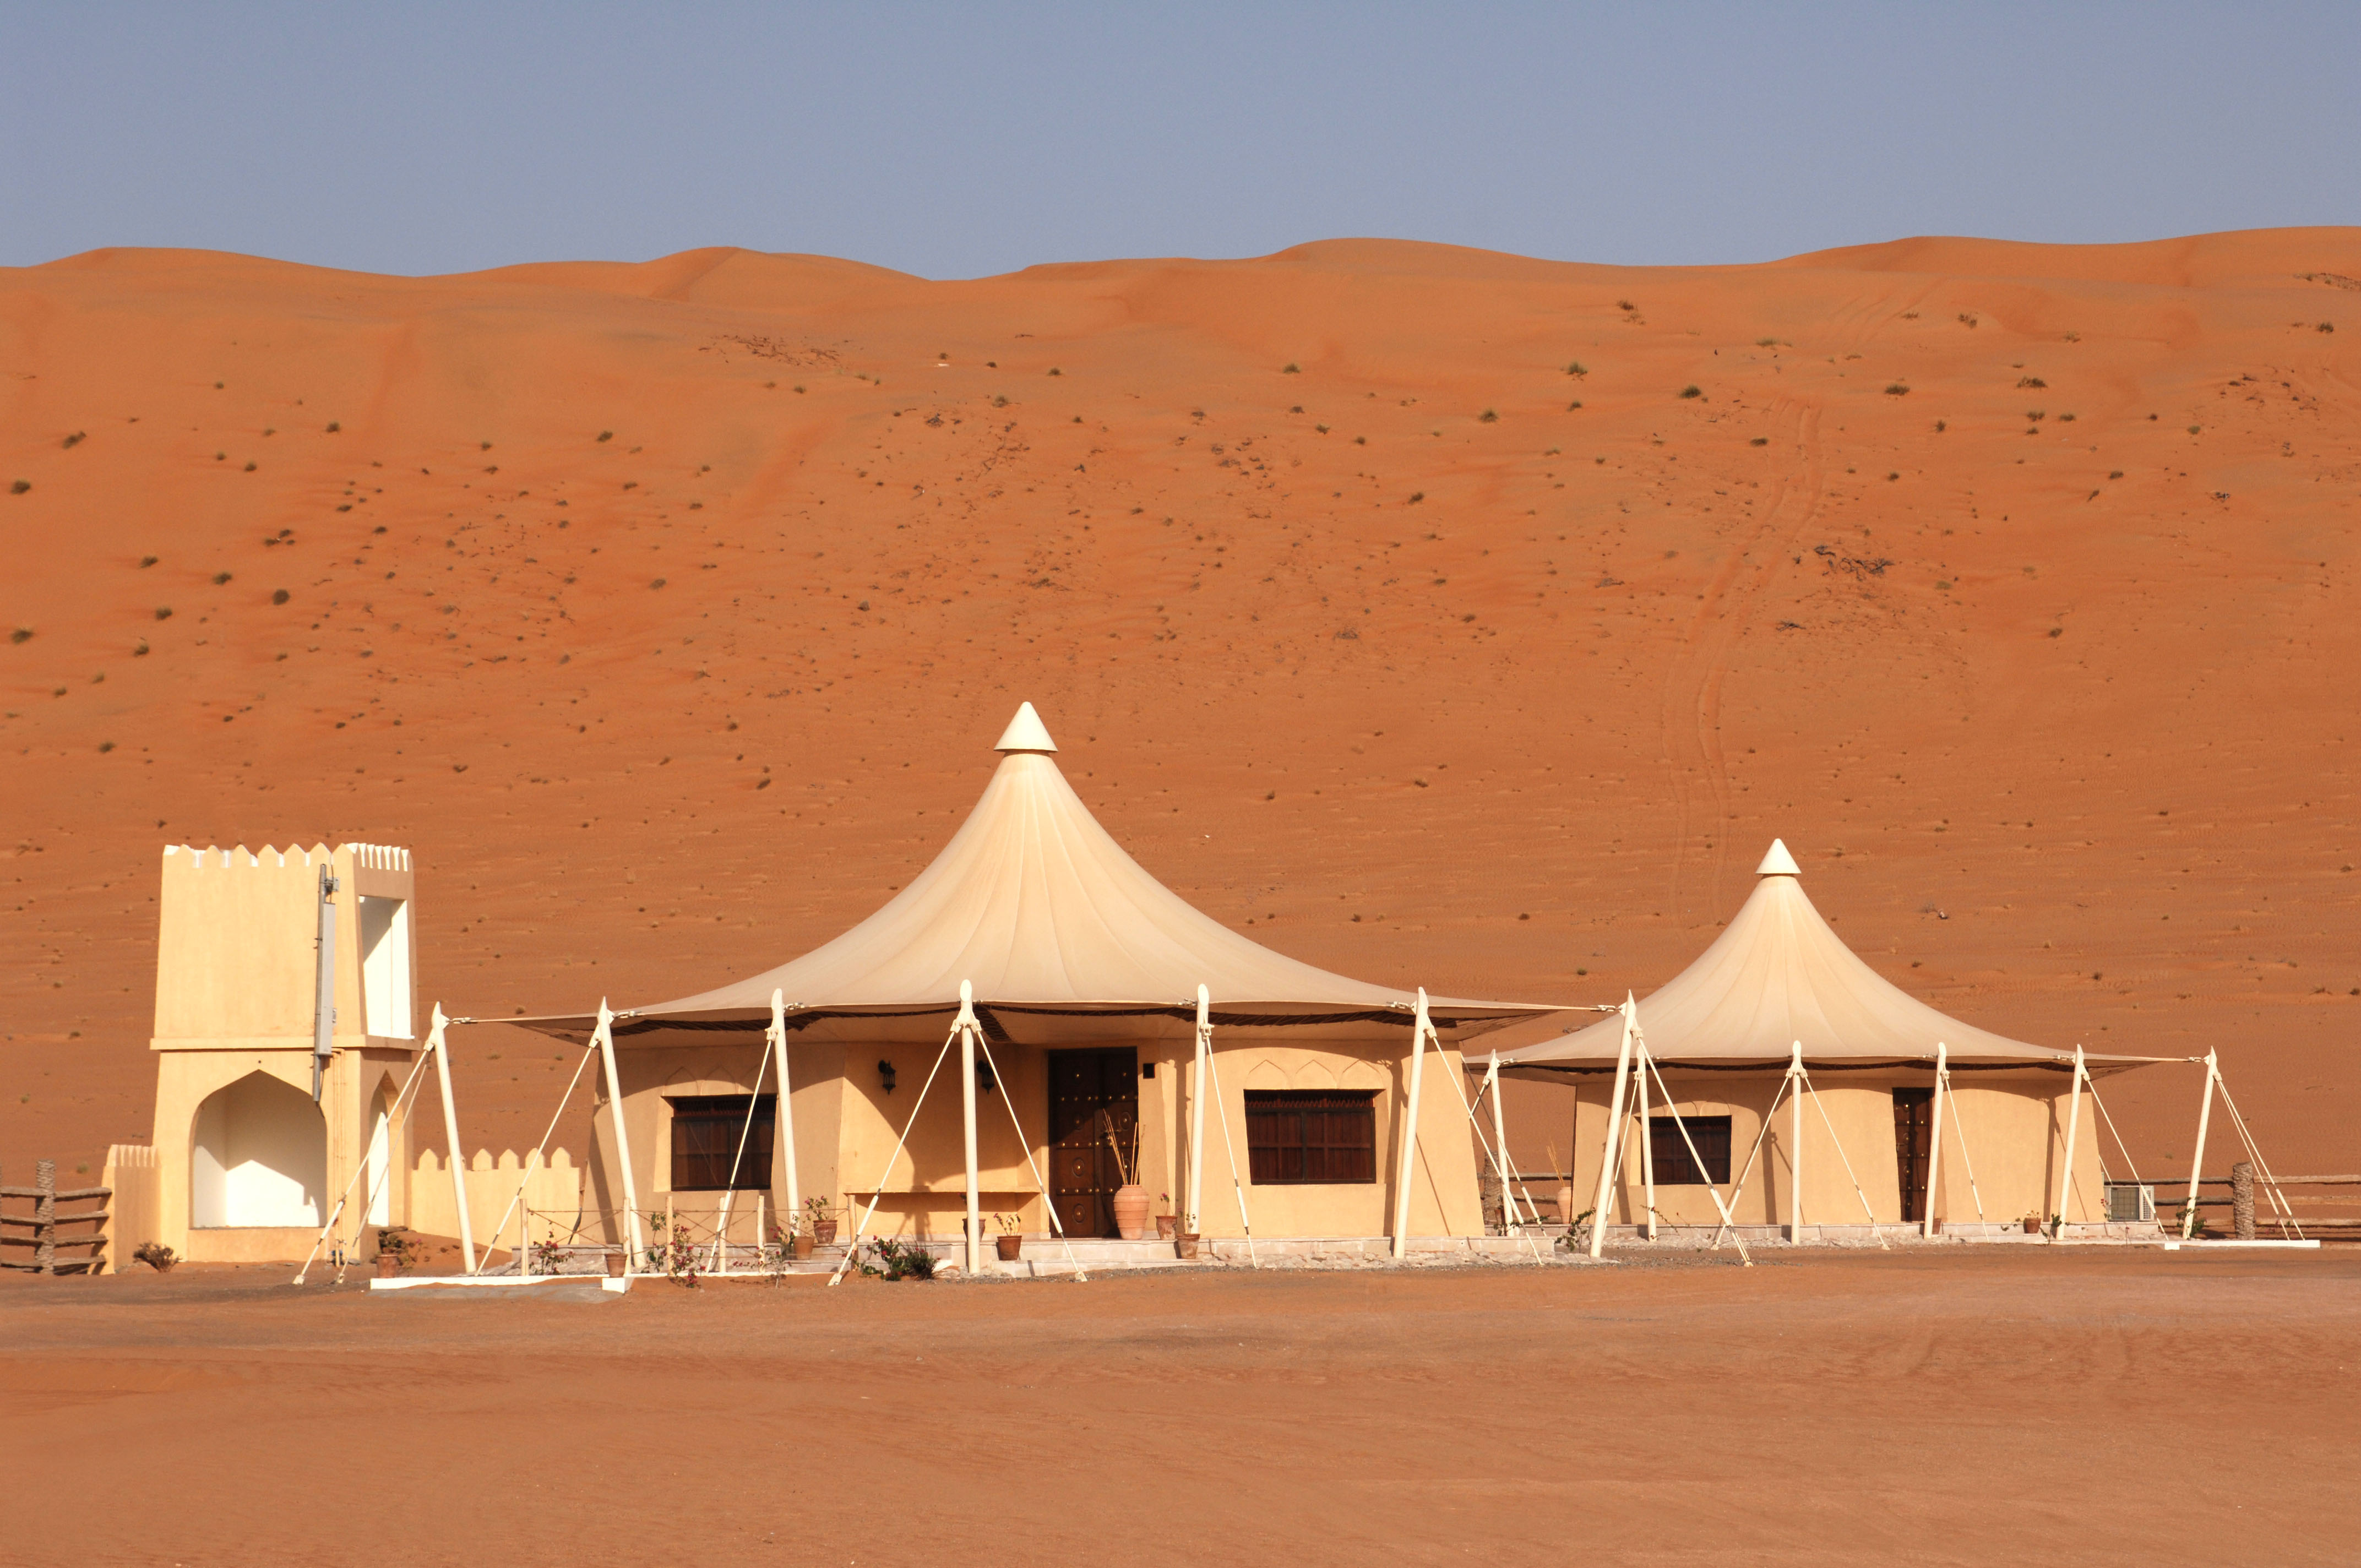 Desert Nights Camp